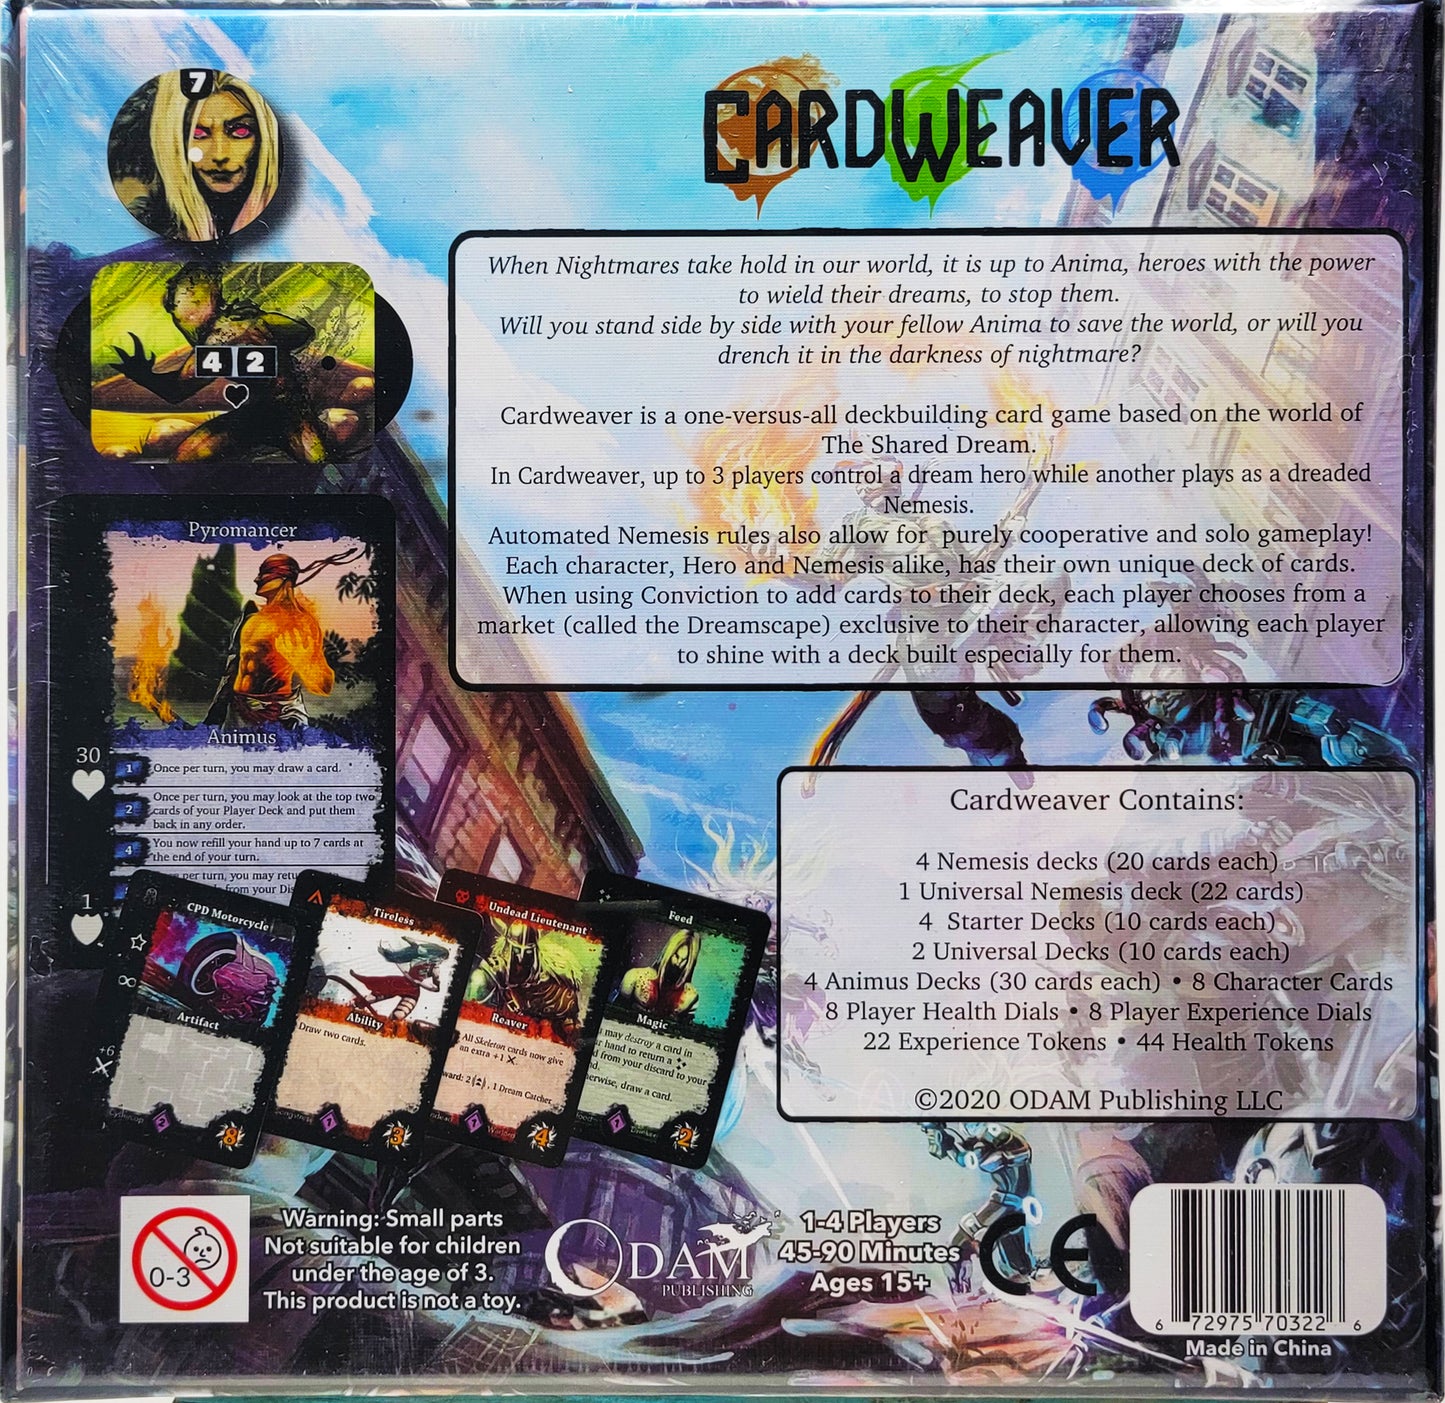 Cardweaver: A Modern Fantasy Deck Building Game